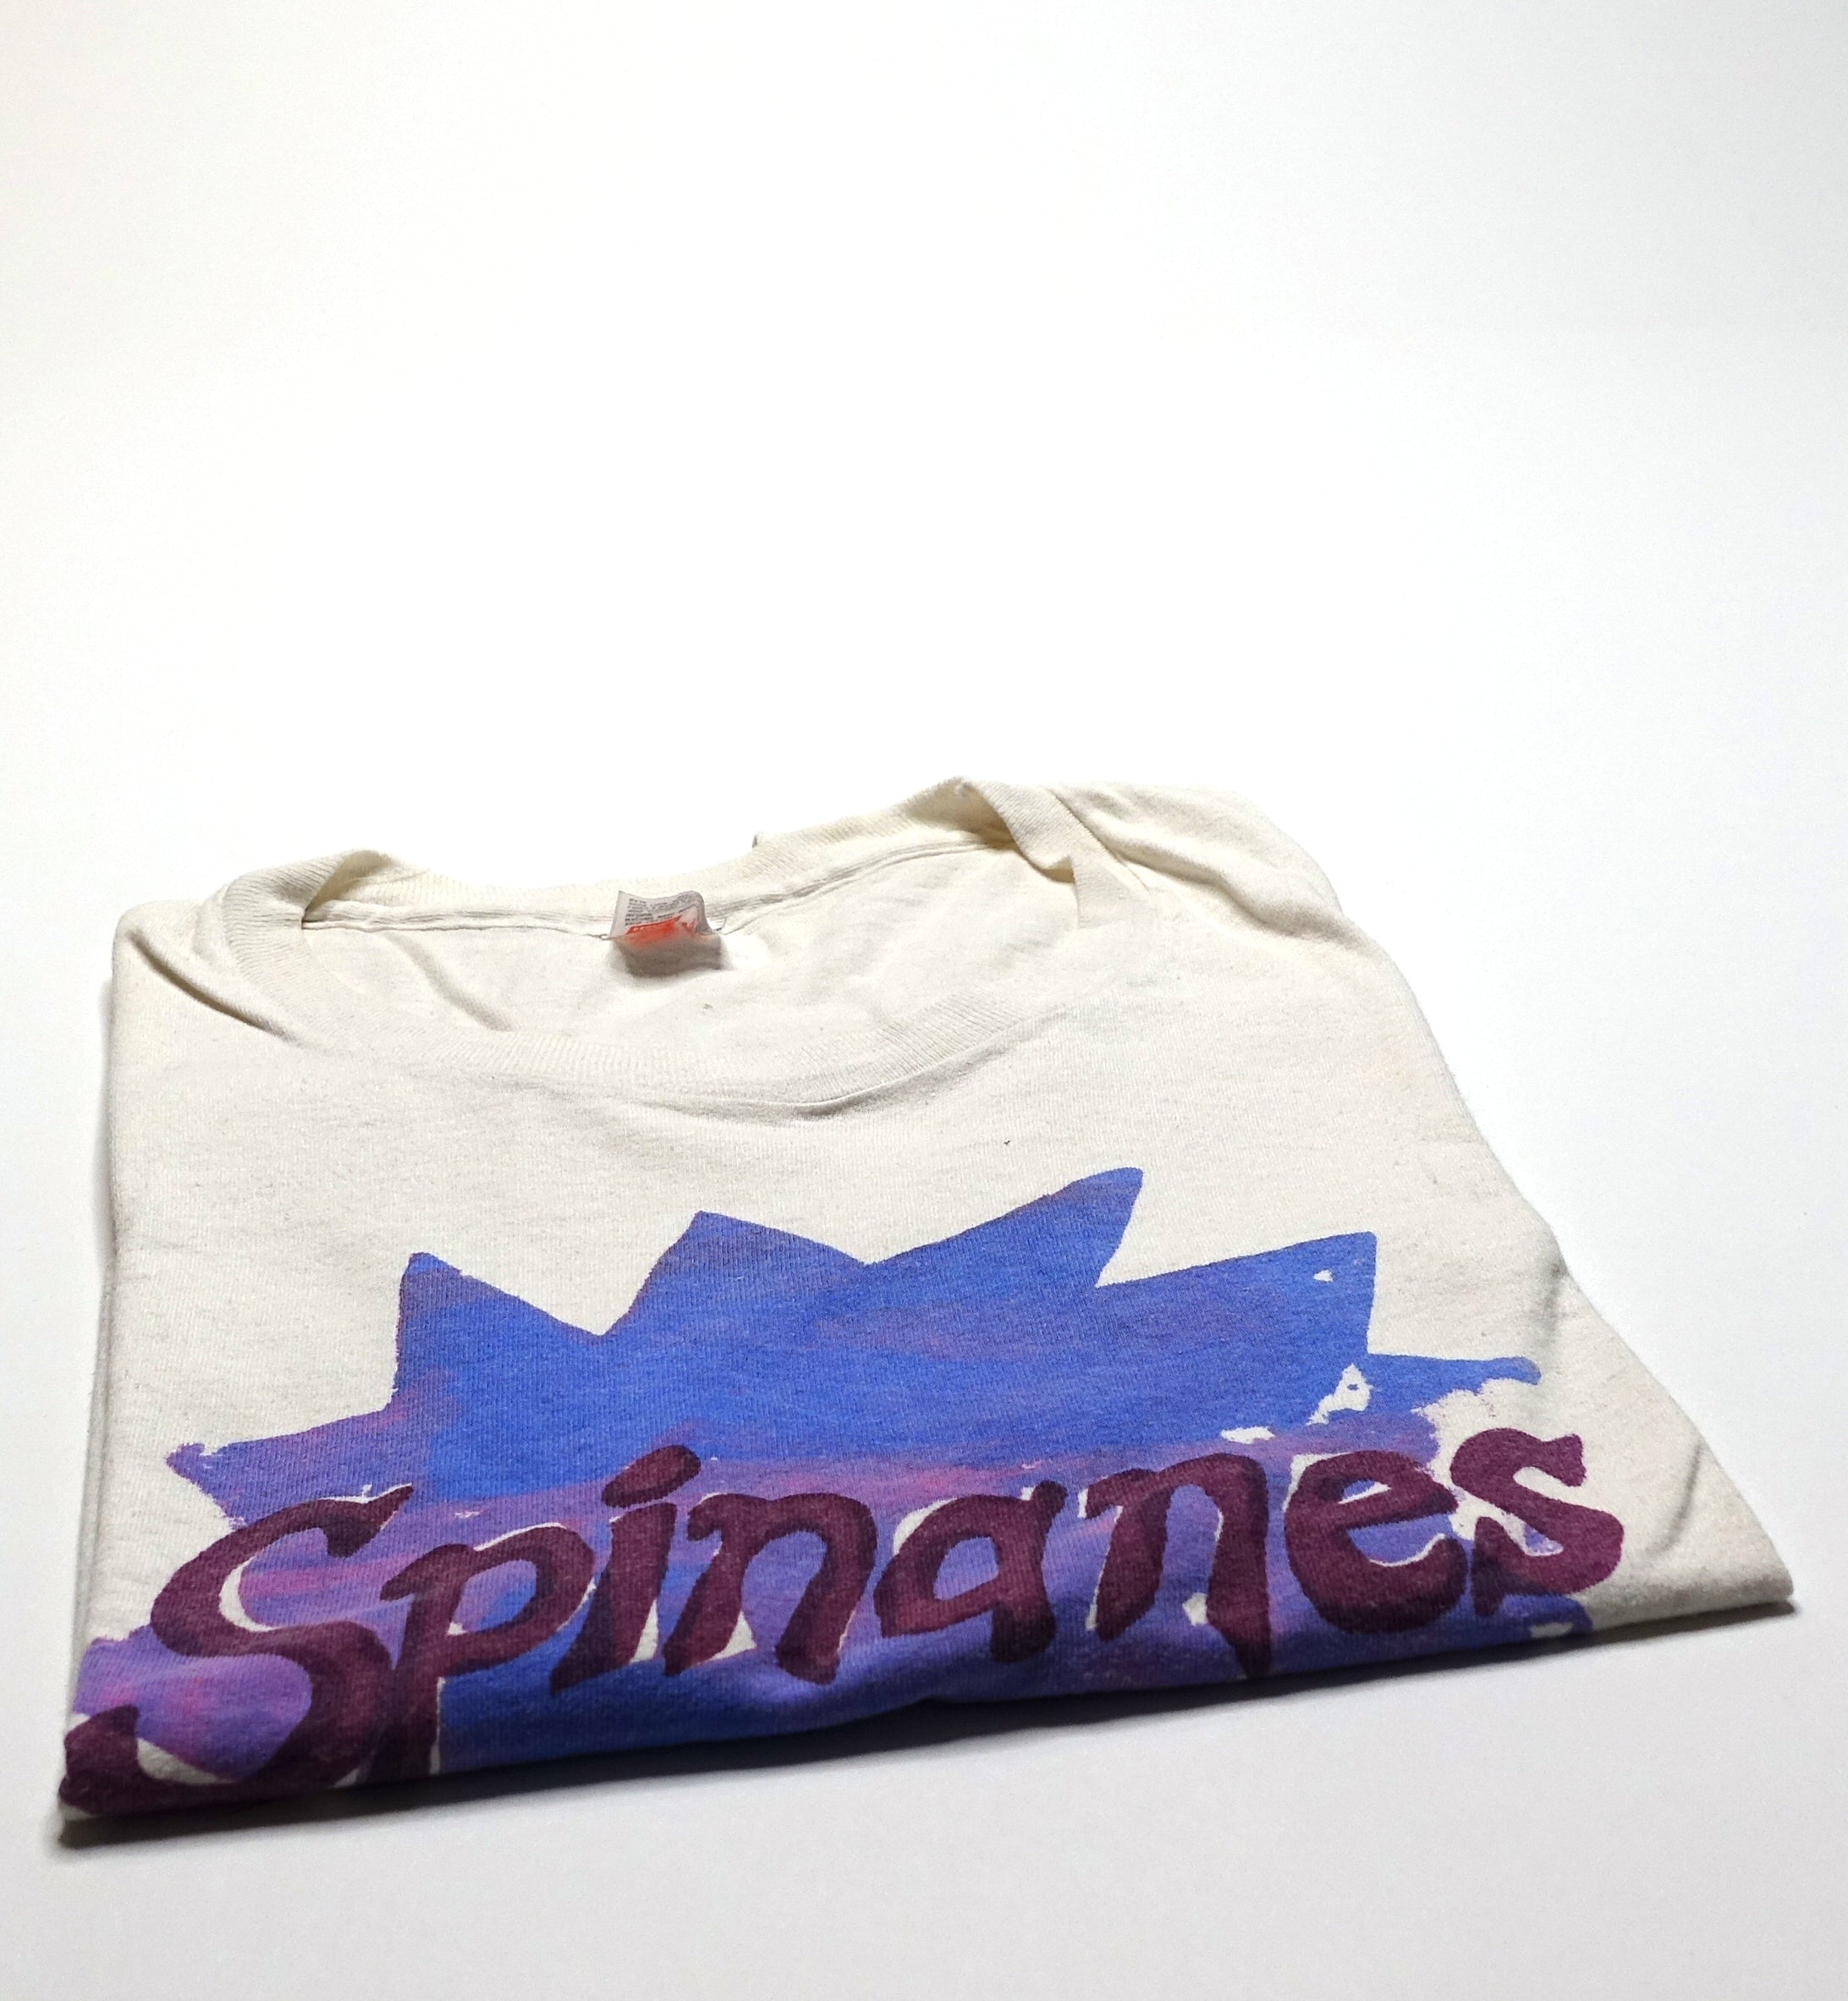 the Spinanes - Starburst Shirt Size Large